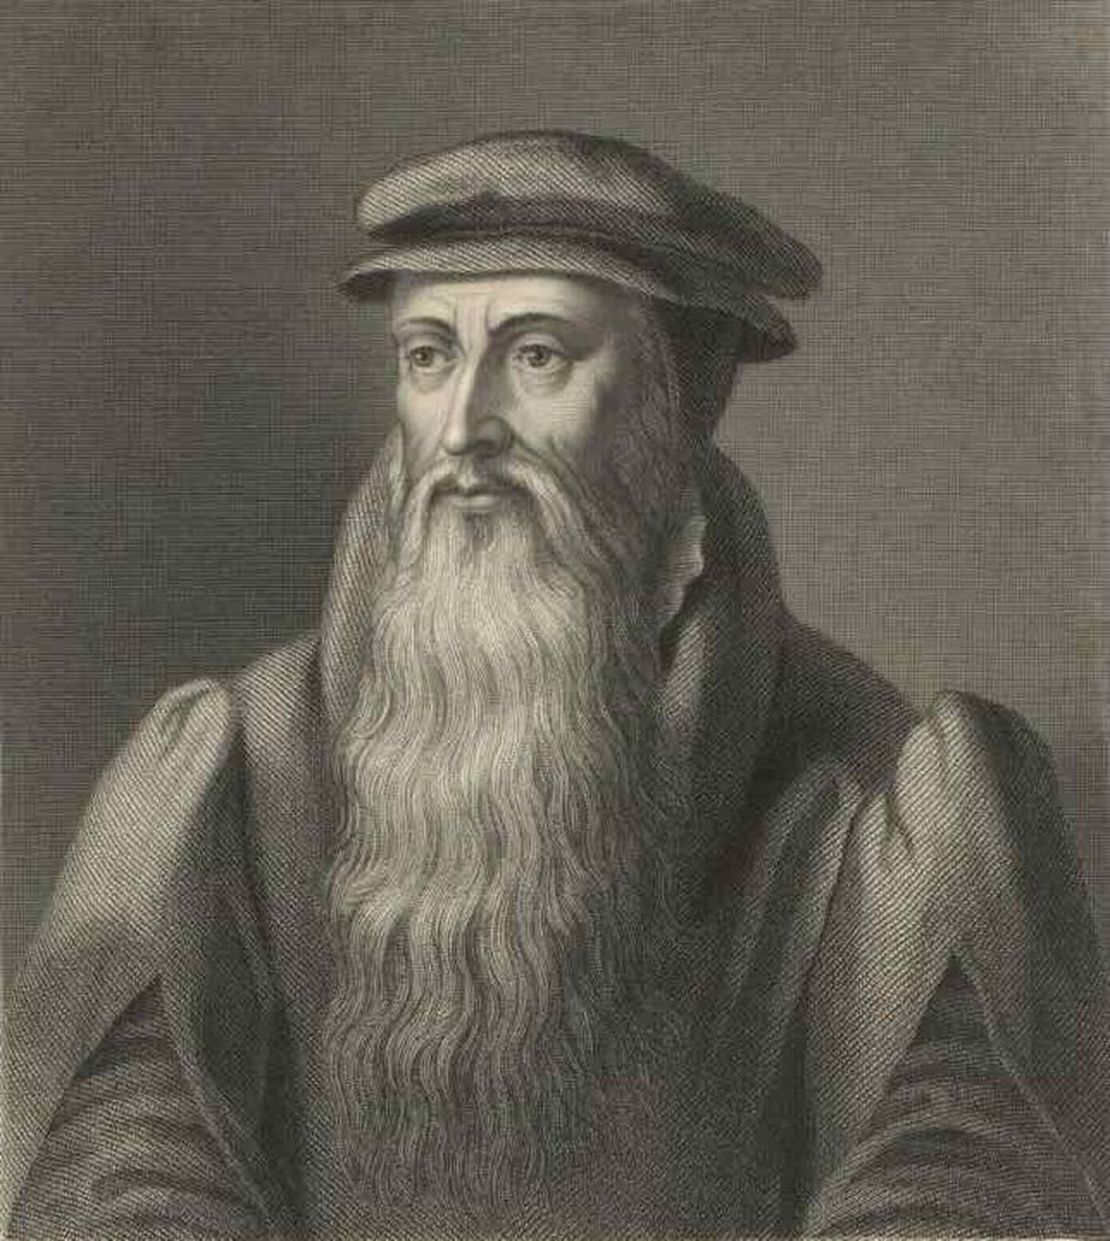 John Knox, leading reformer of Church of Scotland, died